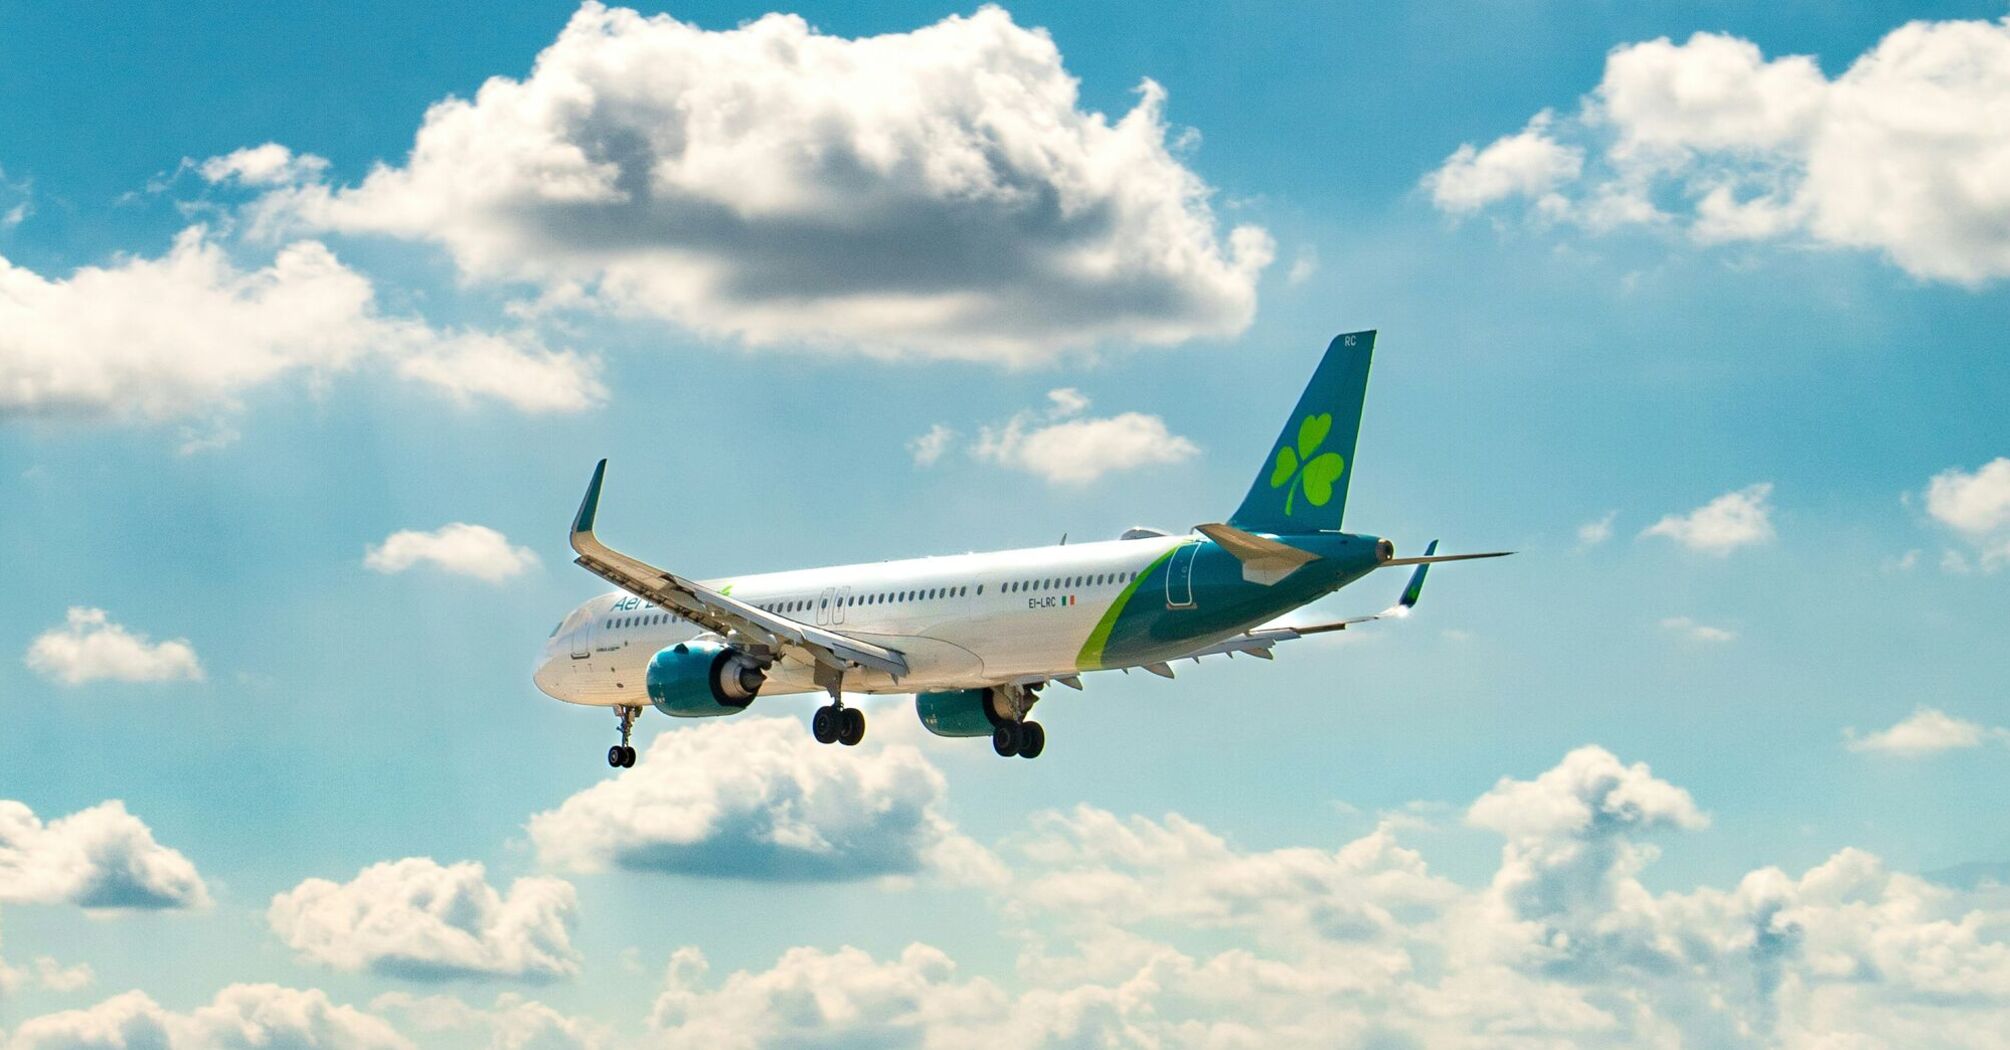 An Aer Lingus airplane flying through a cloudy sky